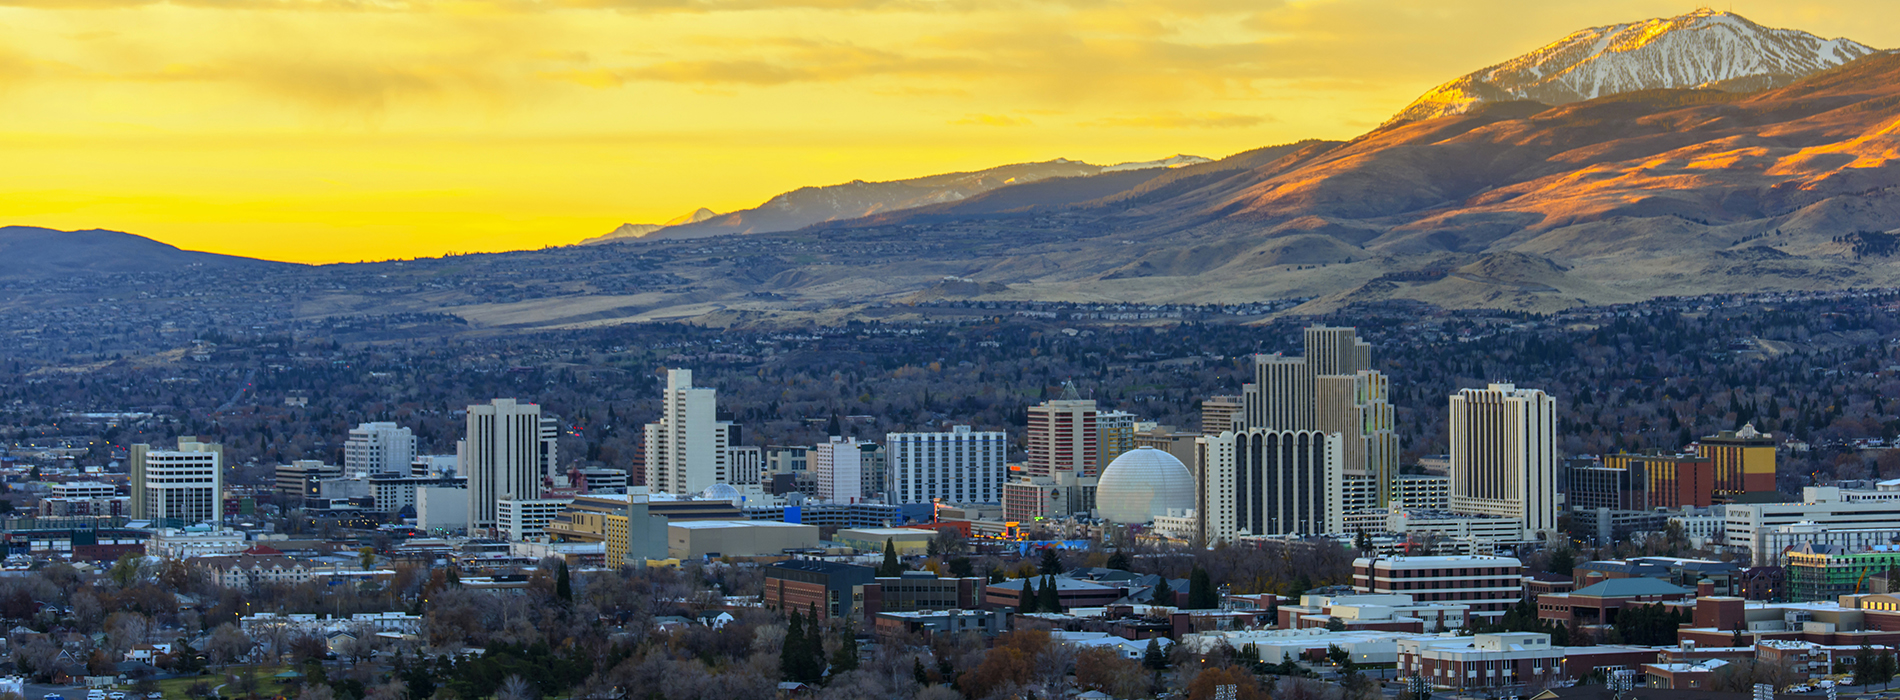 Reno, Nevada at sunrise.